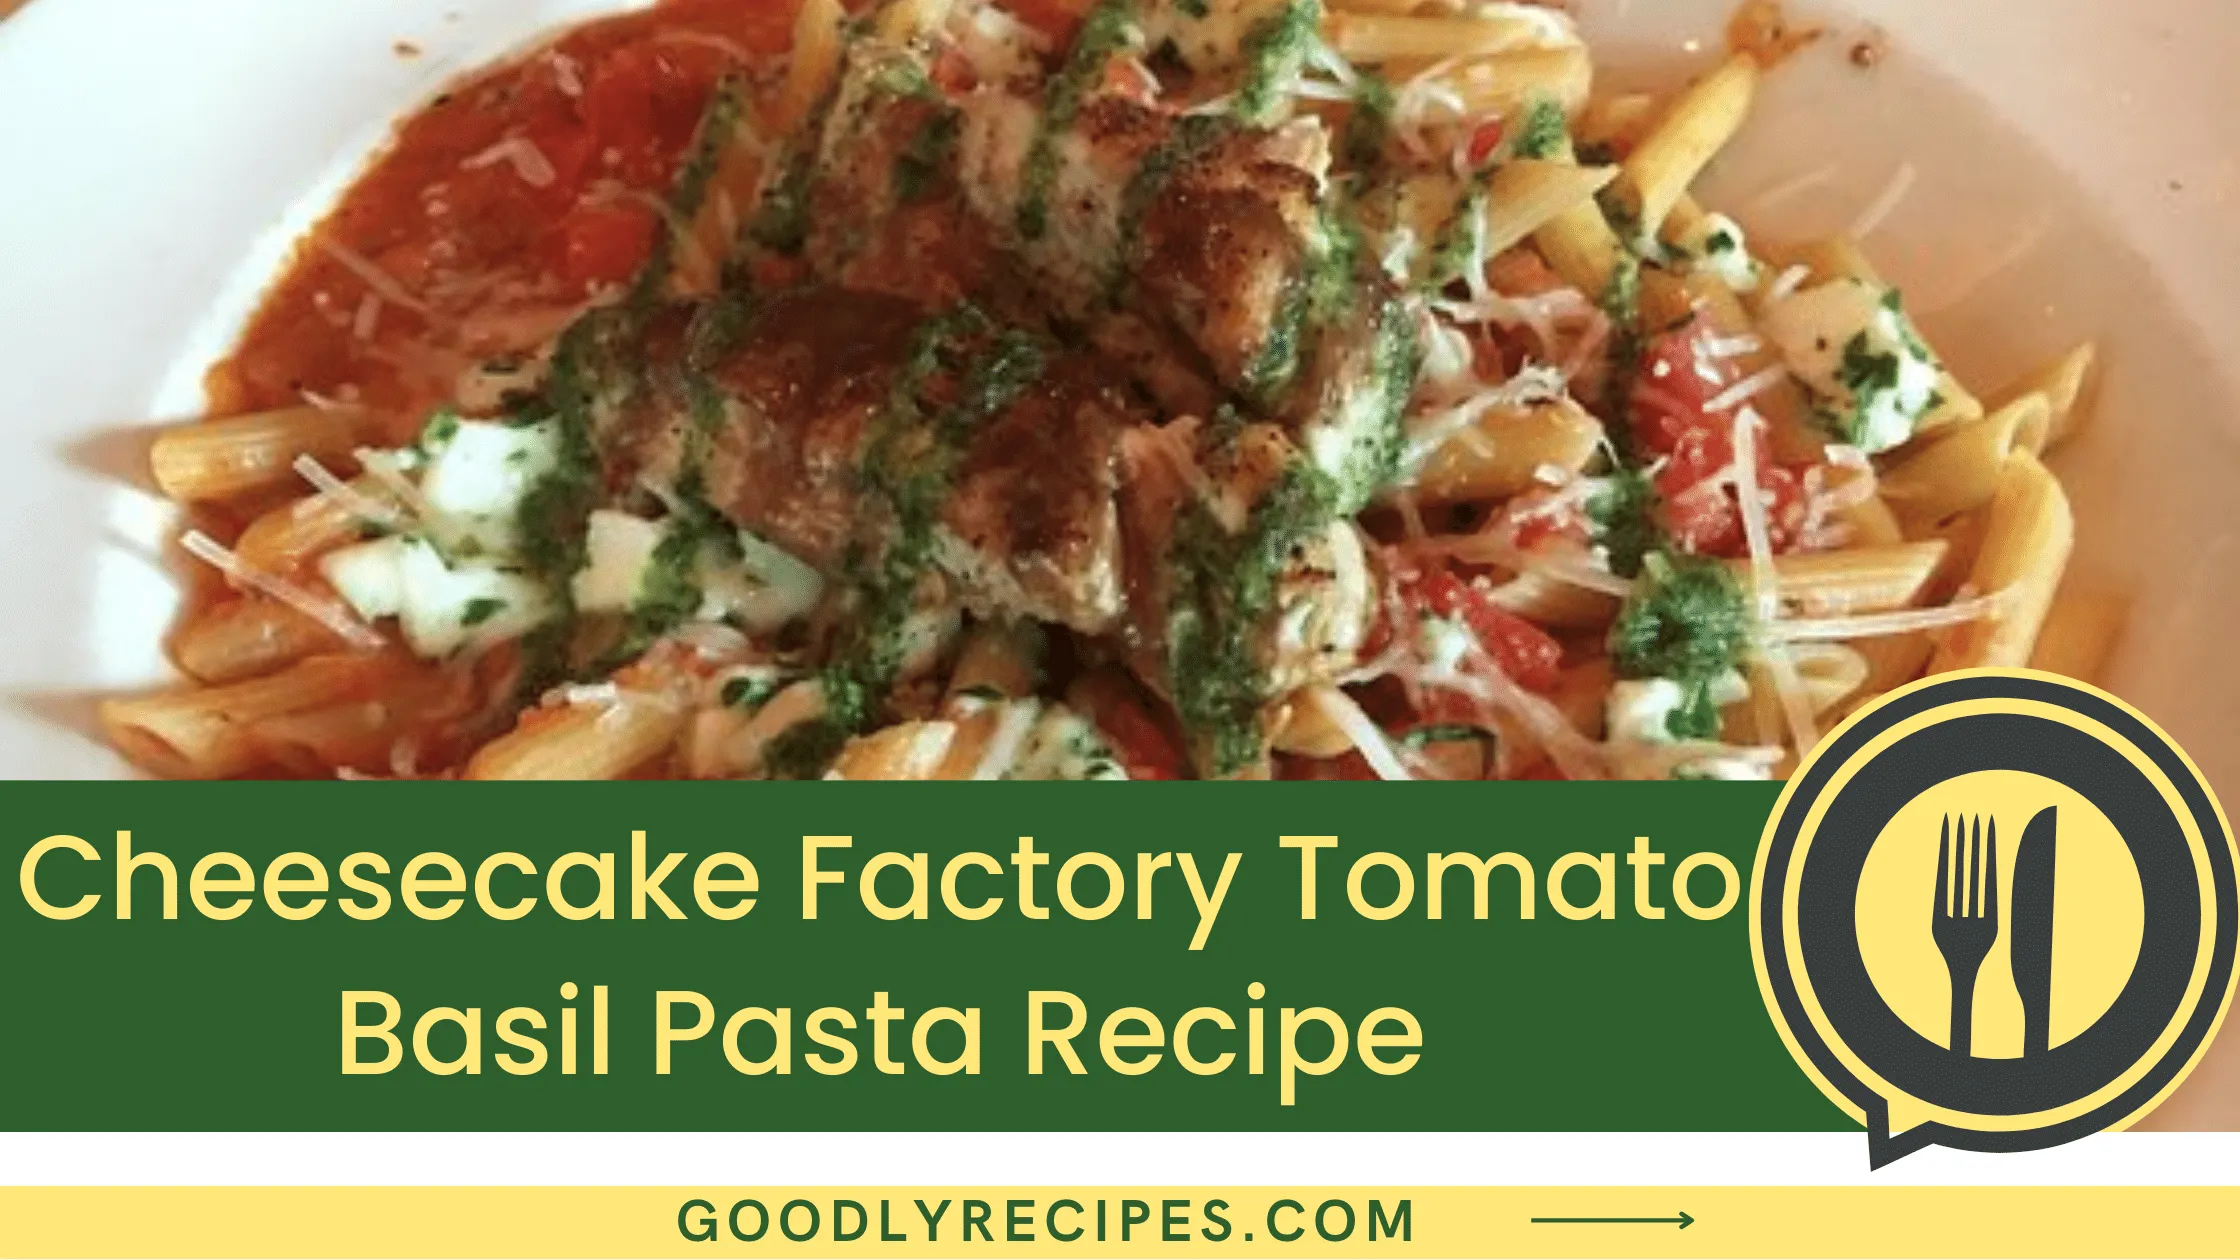 Cheesecake Factory Tomato Basil Pasta Recipe